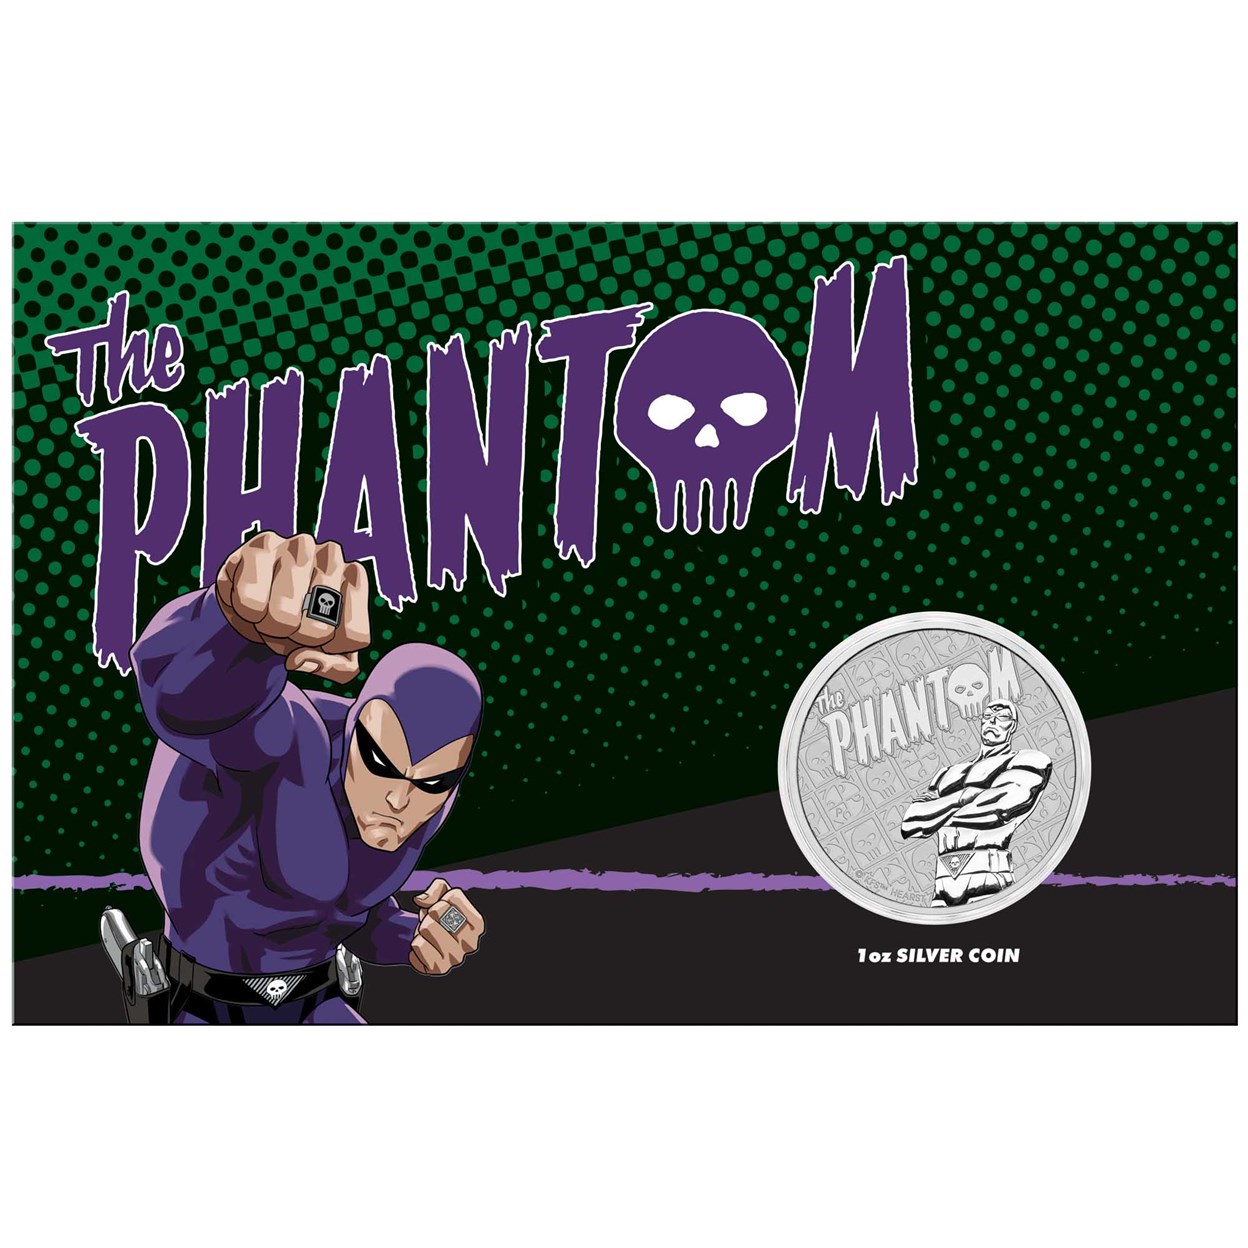 00 04 2022 The Phantom 2022 1oz Silver Coin InCard HighRes